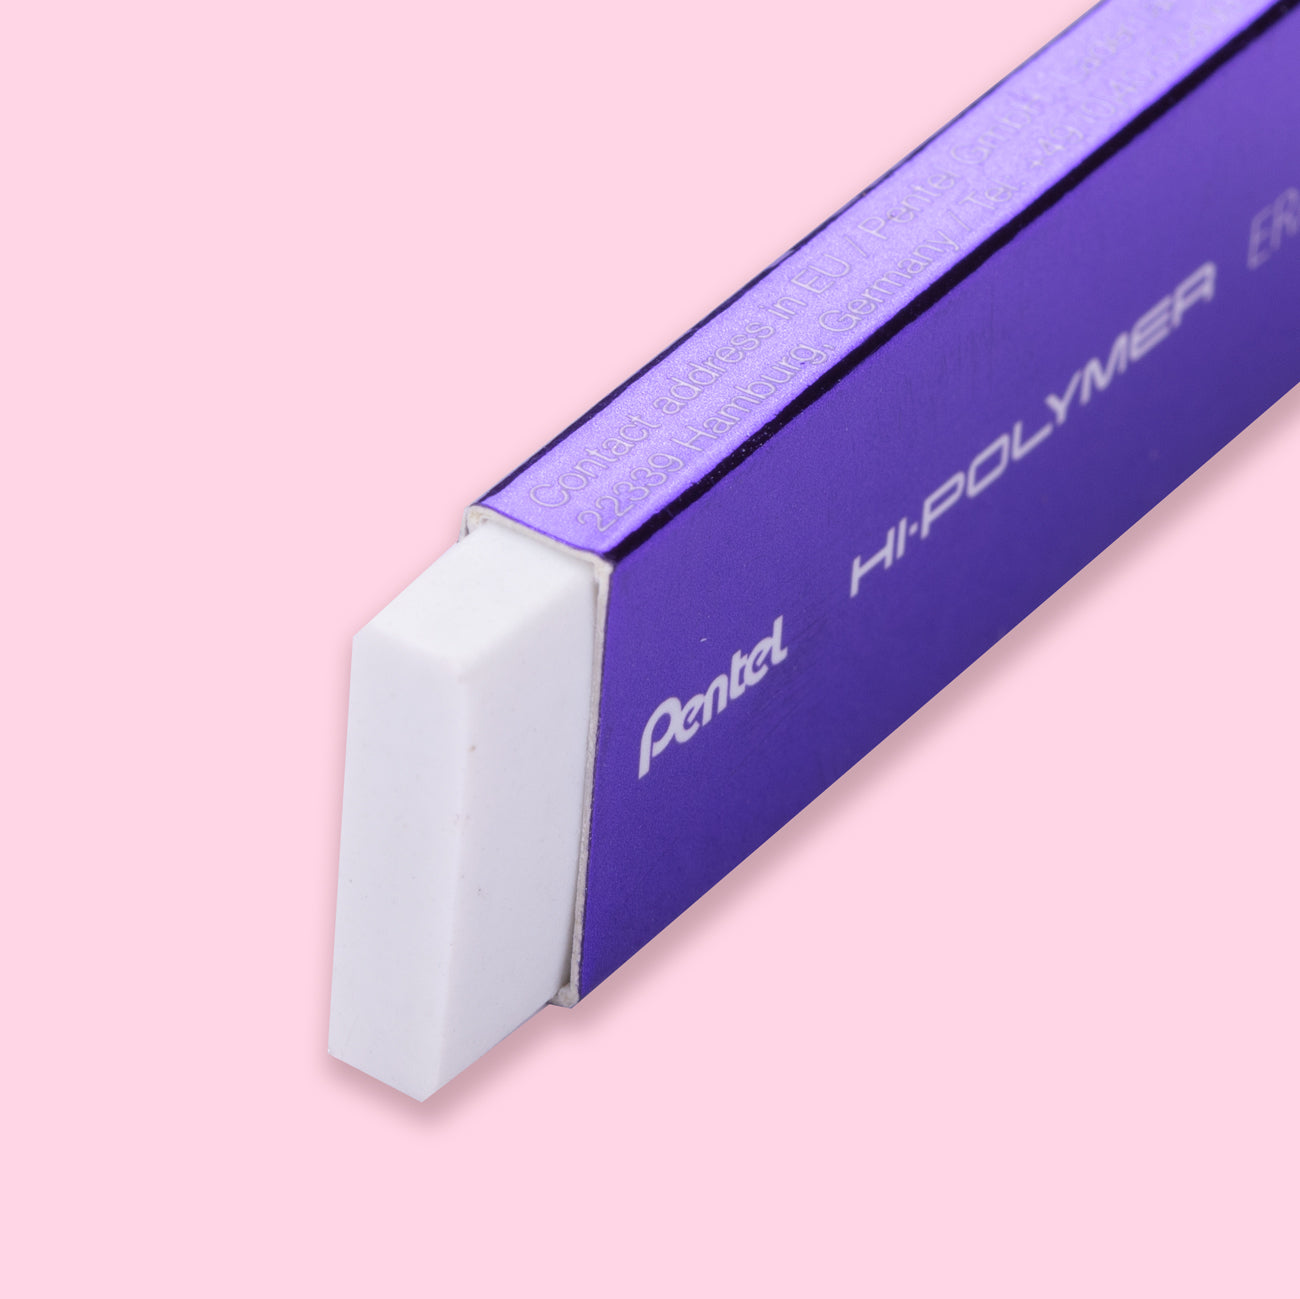 Pentel AIN Hi-Polymer Plastic Eraser Soft 